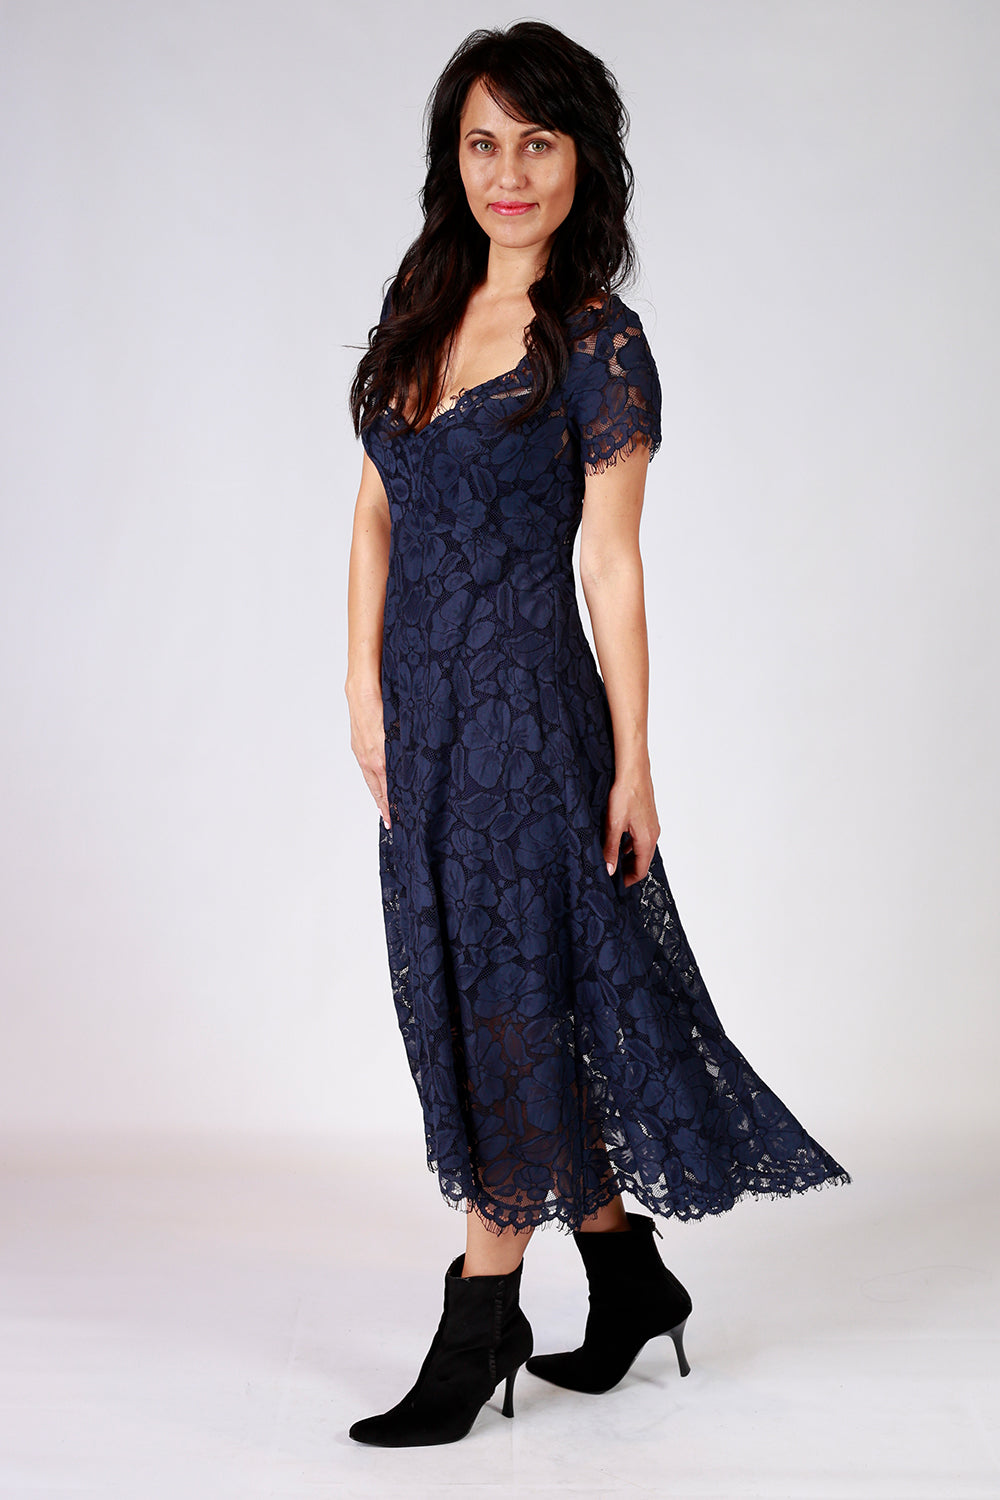 Annah Stretton | Moon Flower Dress | Designer Fashion NZ | Occasion ...